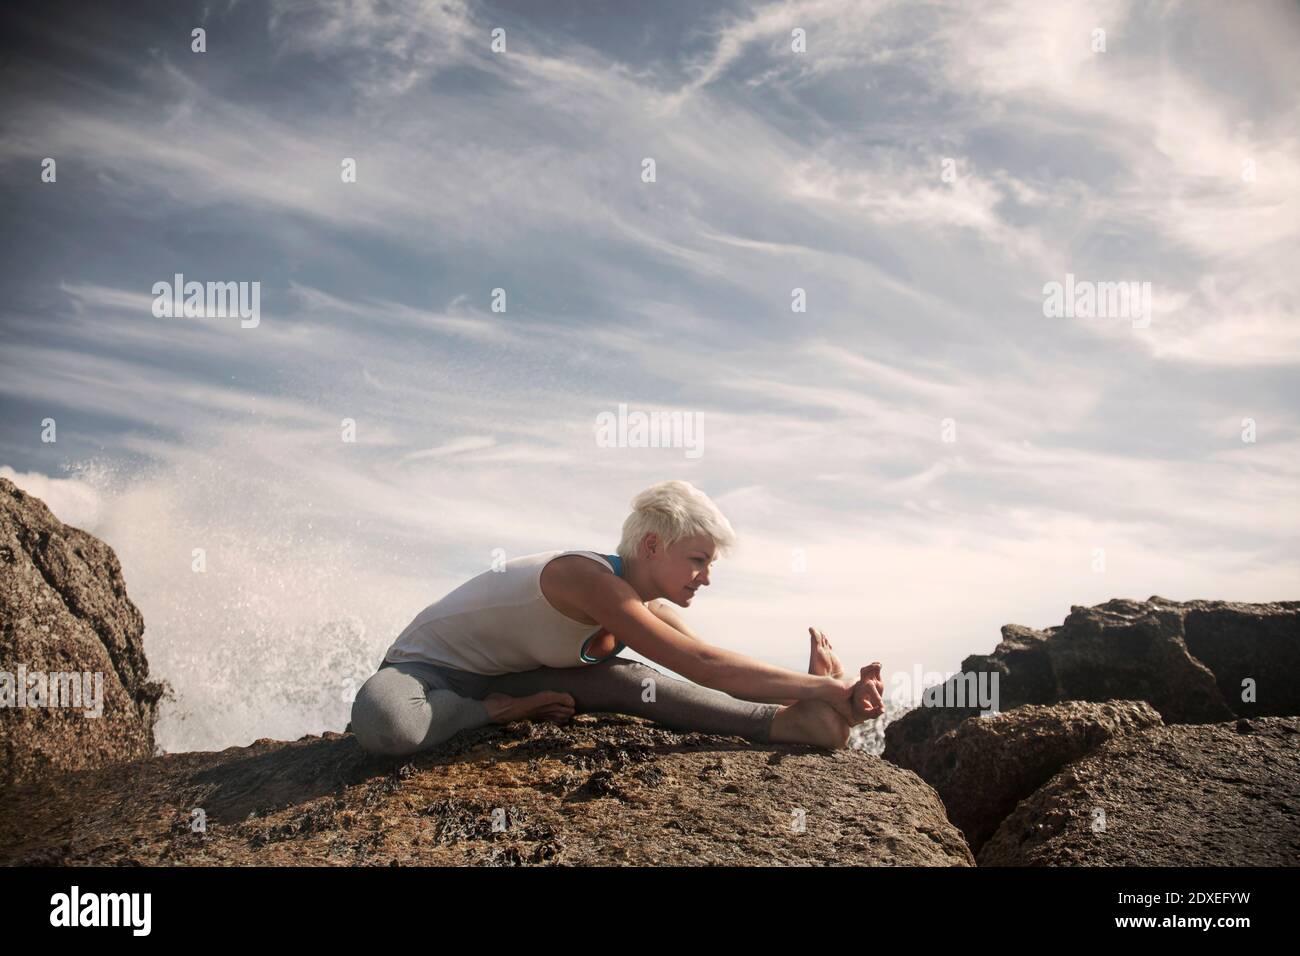 Blonde flexible Frau praktiziert Yoga auf Felsformation am Strand Gegen den Himmel Stockfoto